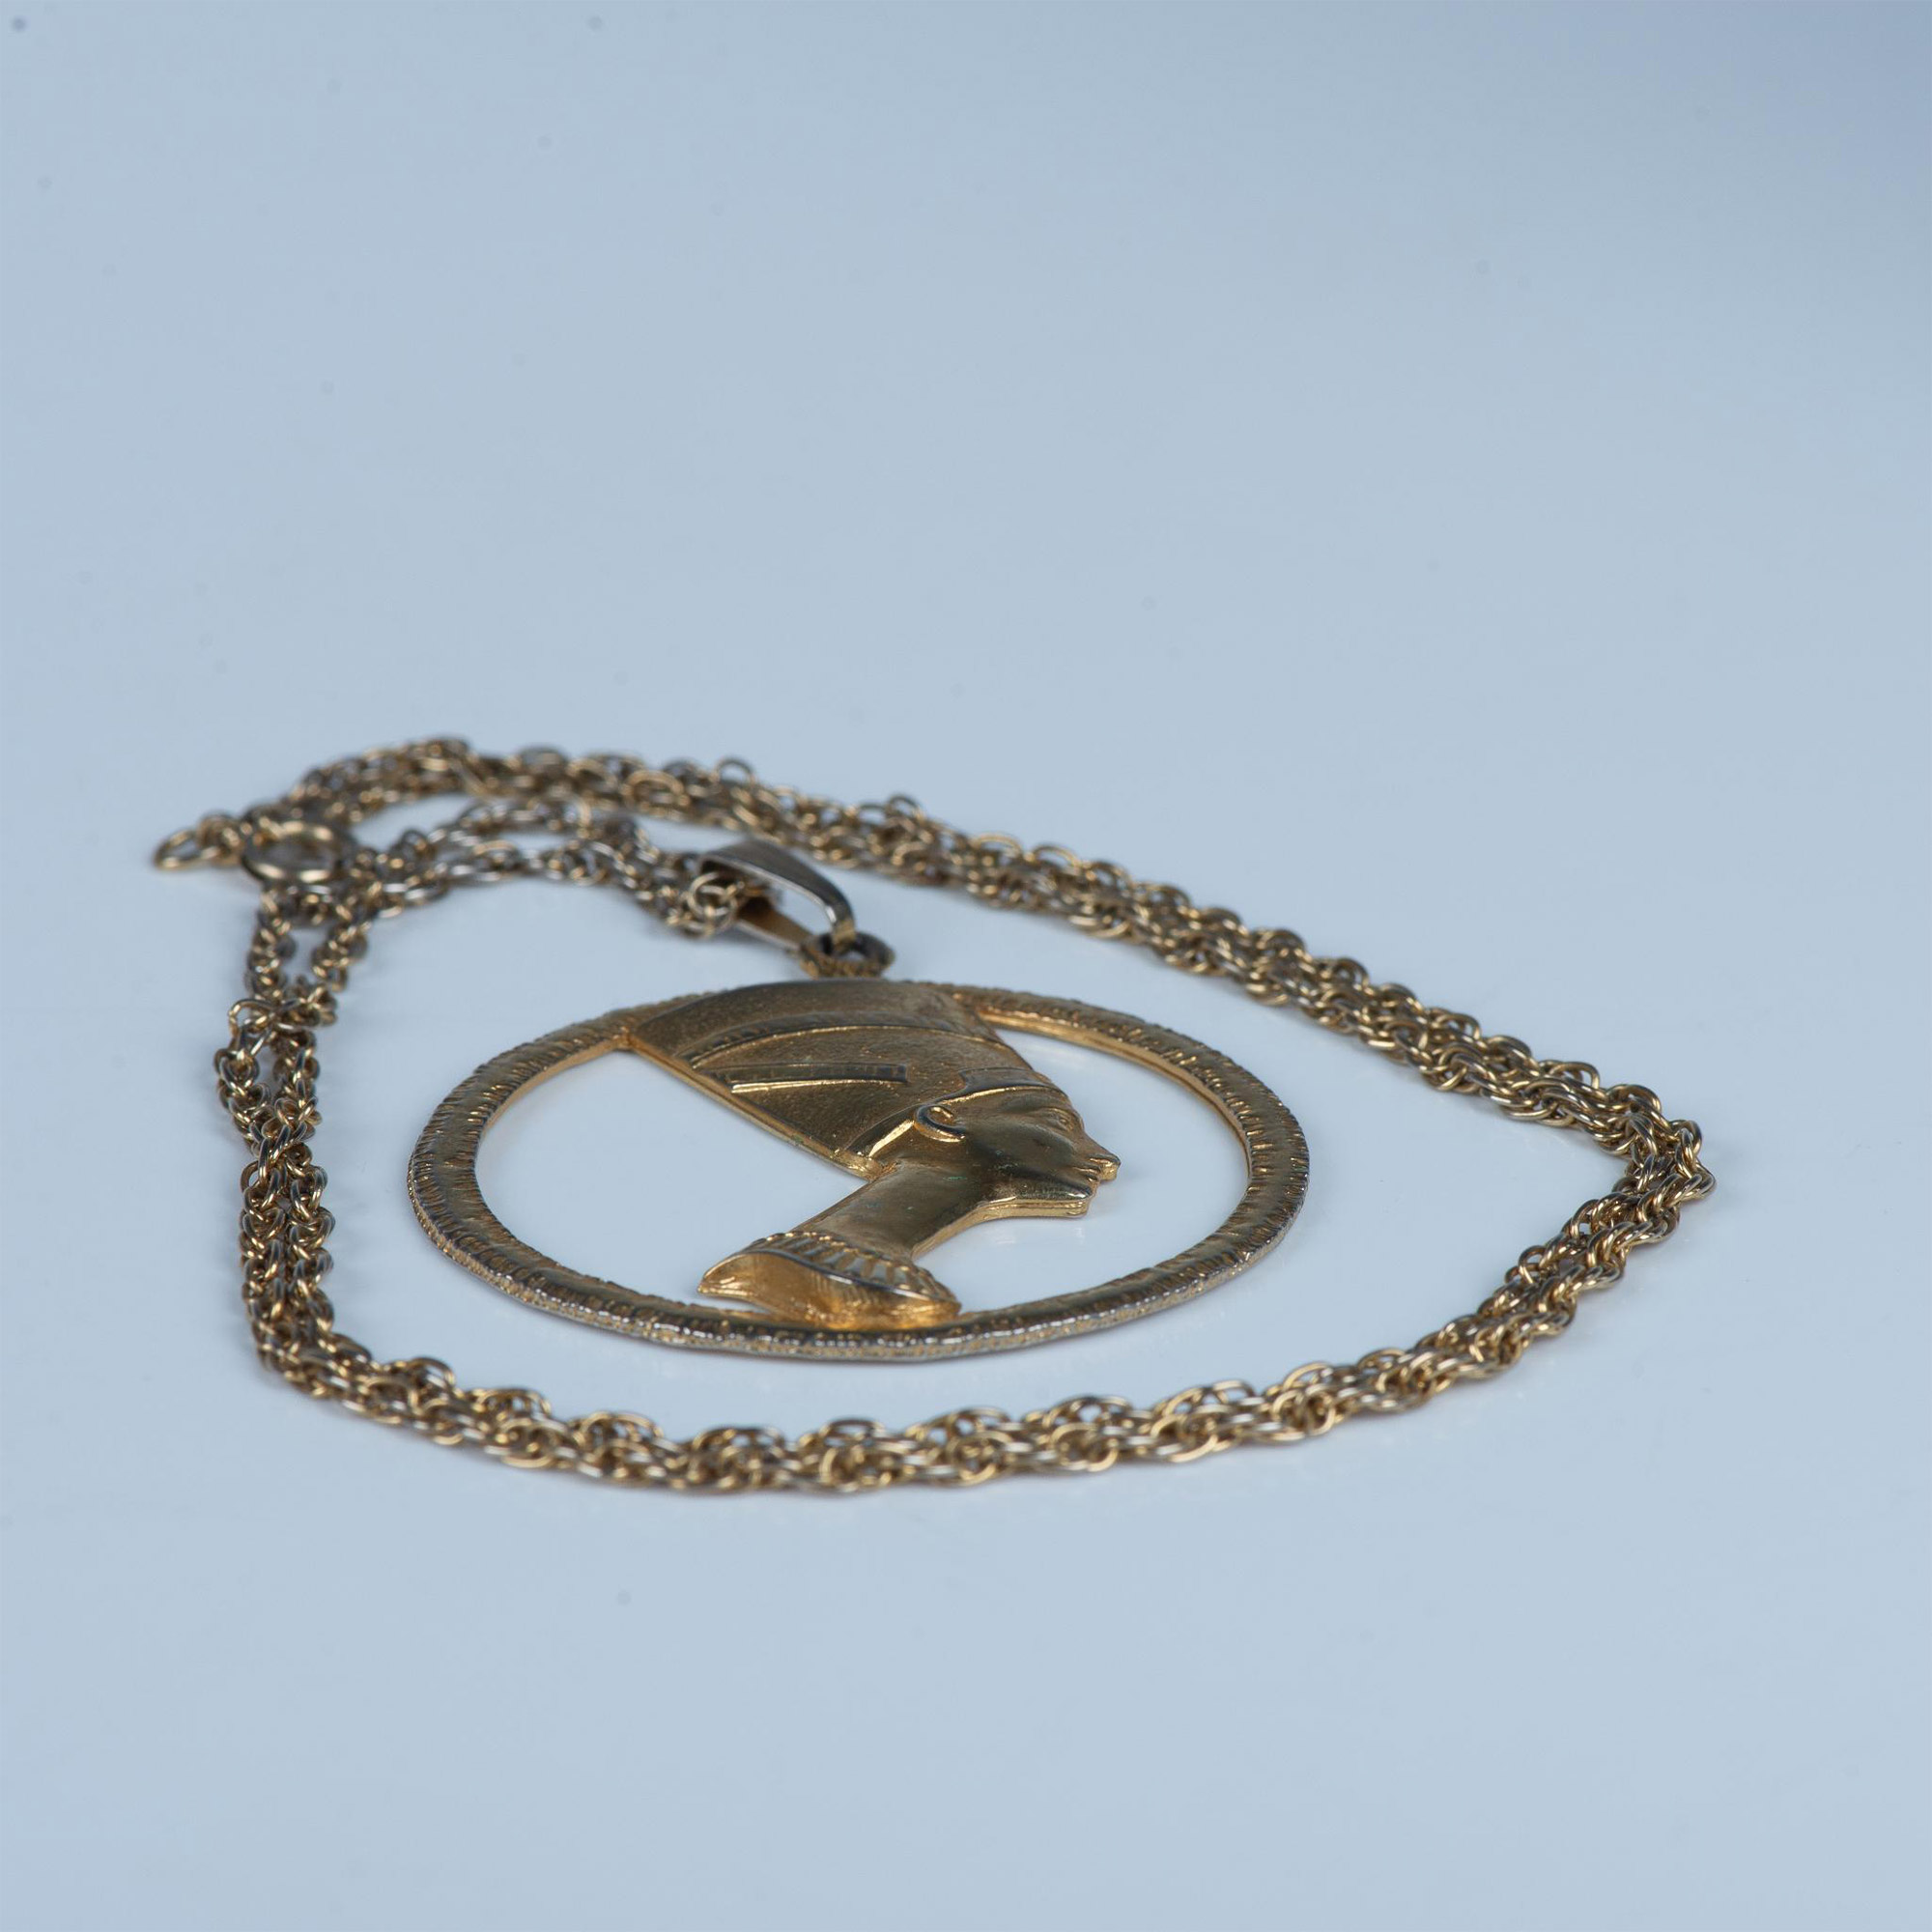 Egyptian Queen Nefertiti Pendant Necklace - Image 4 of 4